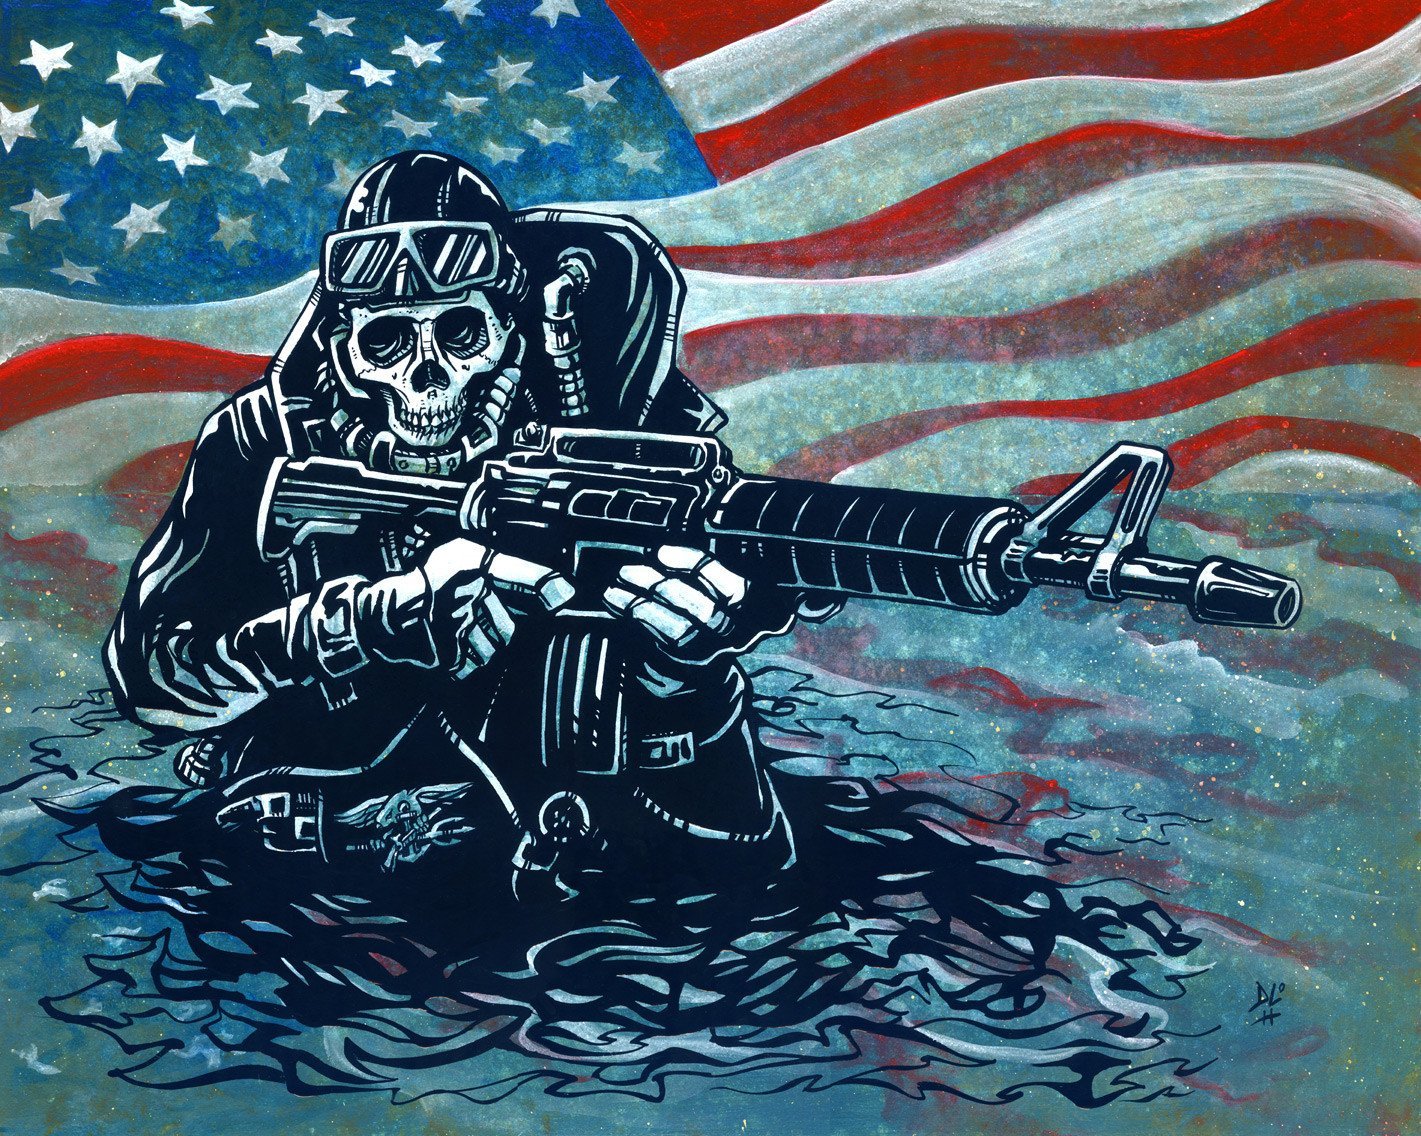 US Navy SEAL by Day of the Dead Artist David Lozeau, Day of the Dead Art, Dia de los Muertos Art, Dia de los Muertos Artist